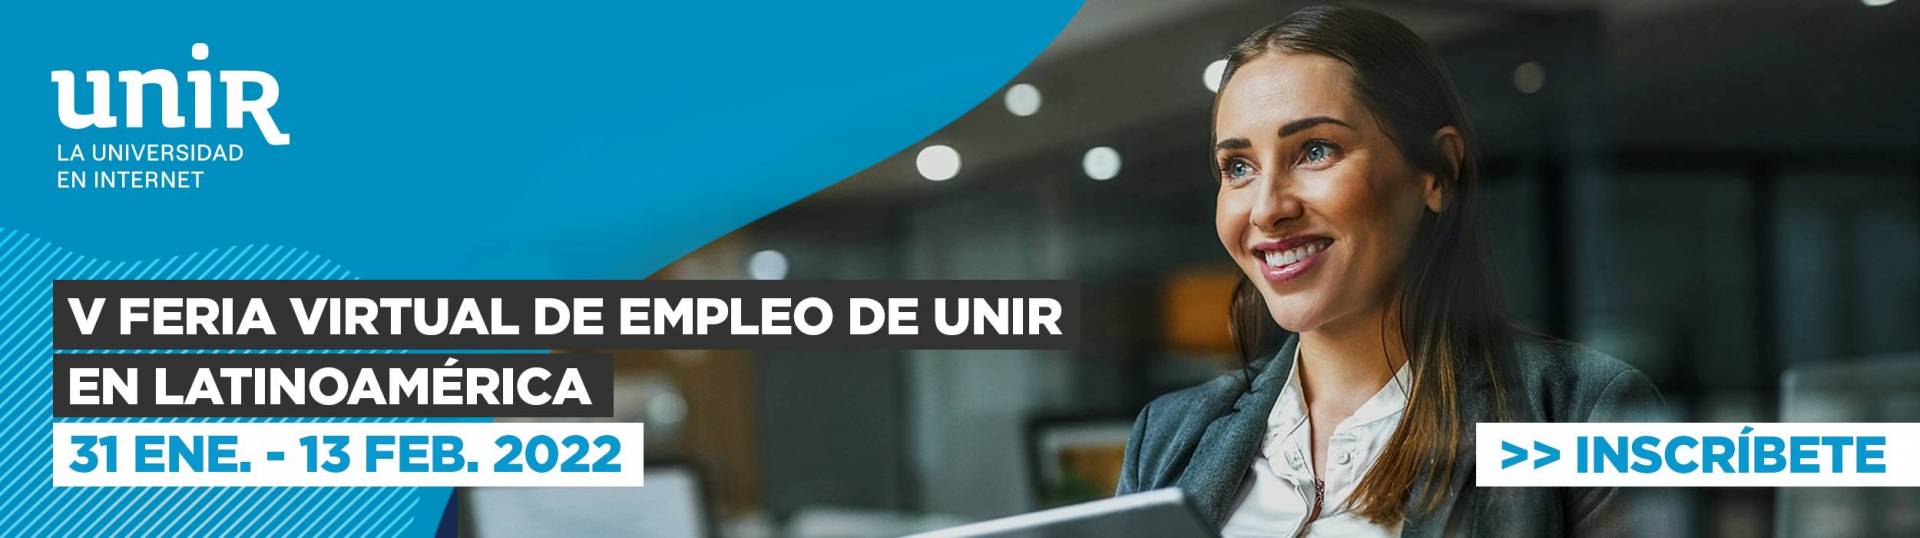 V Feria Virtual de Empleo de UNIR en Latinoamérica